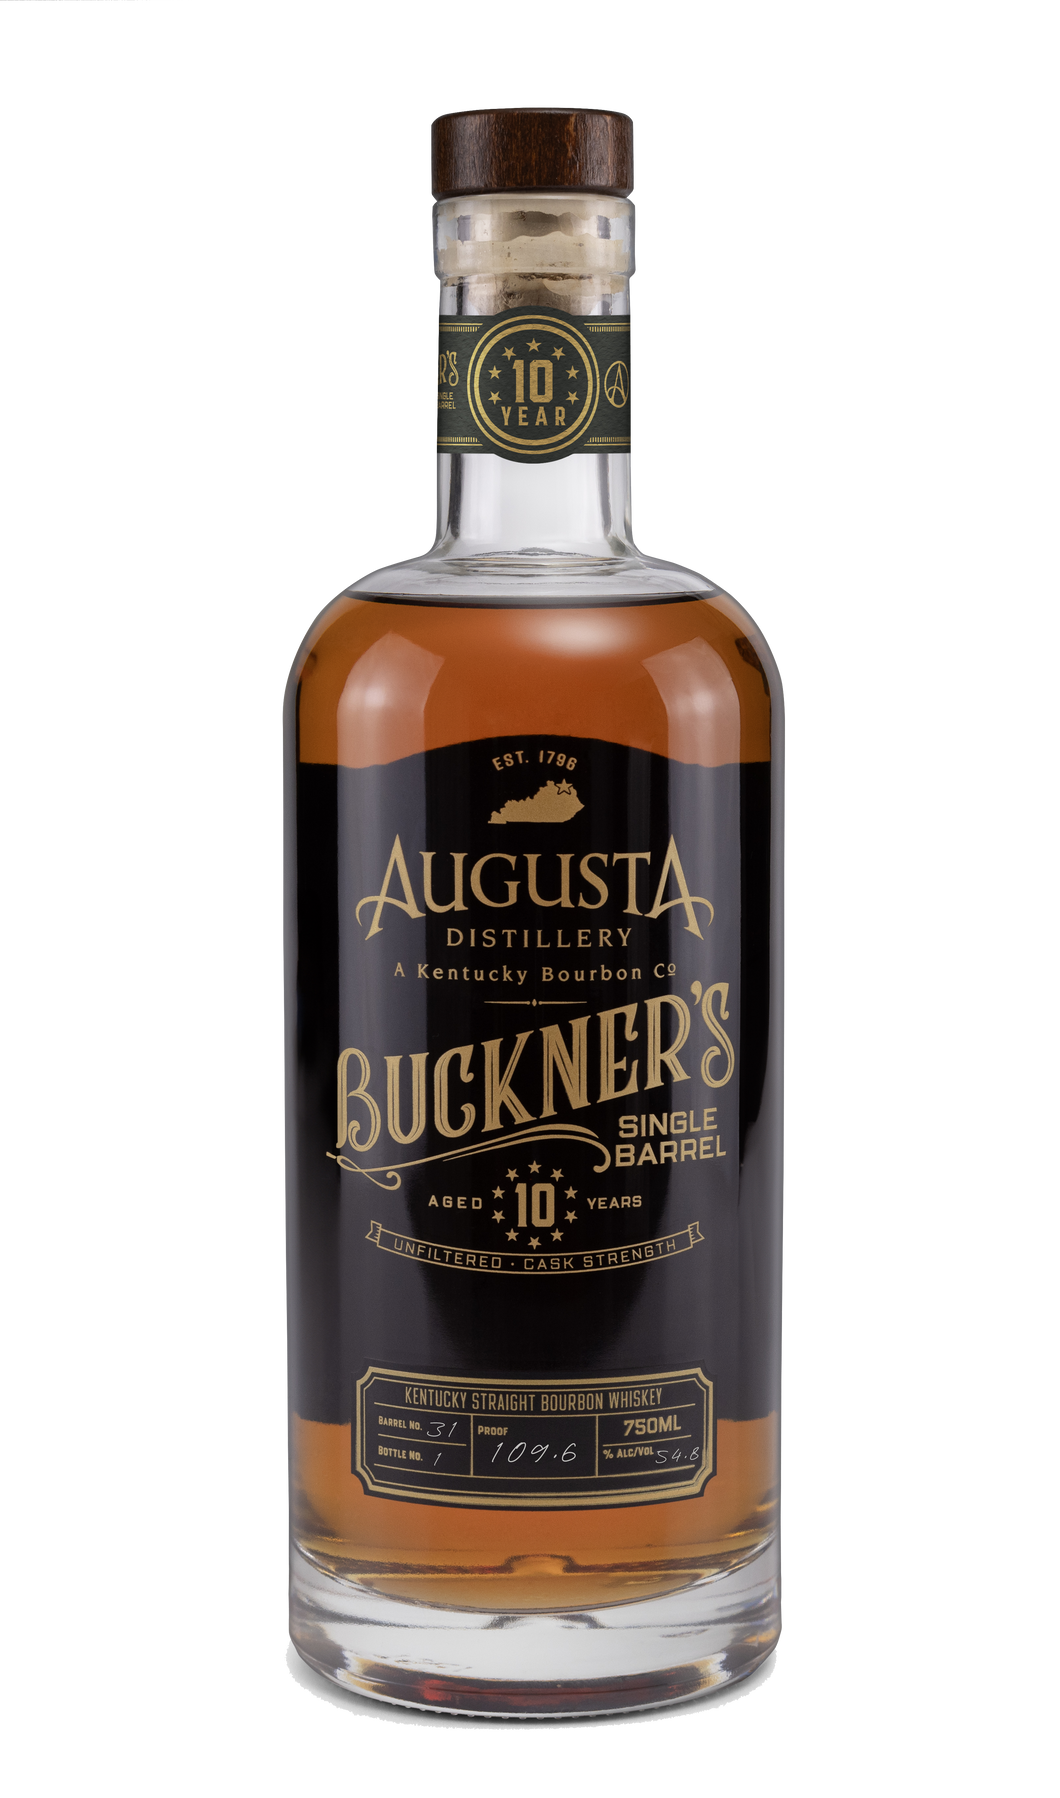 Augusta Distillery Buckner's 10-Year Single Barrel Bourbon Barrel #31 109.6 proof - Selected by Seelbach's